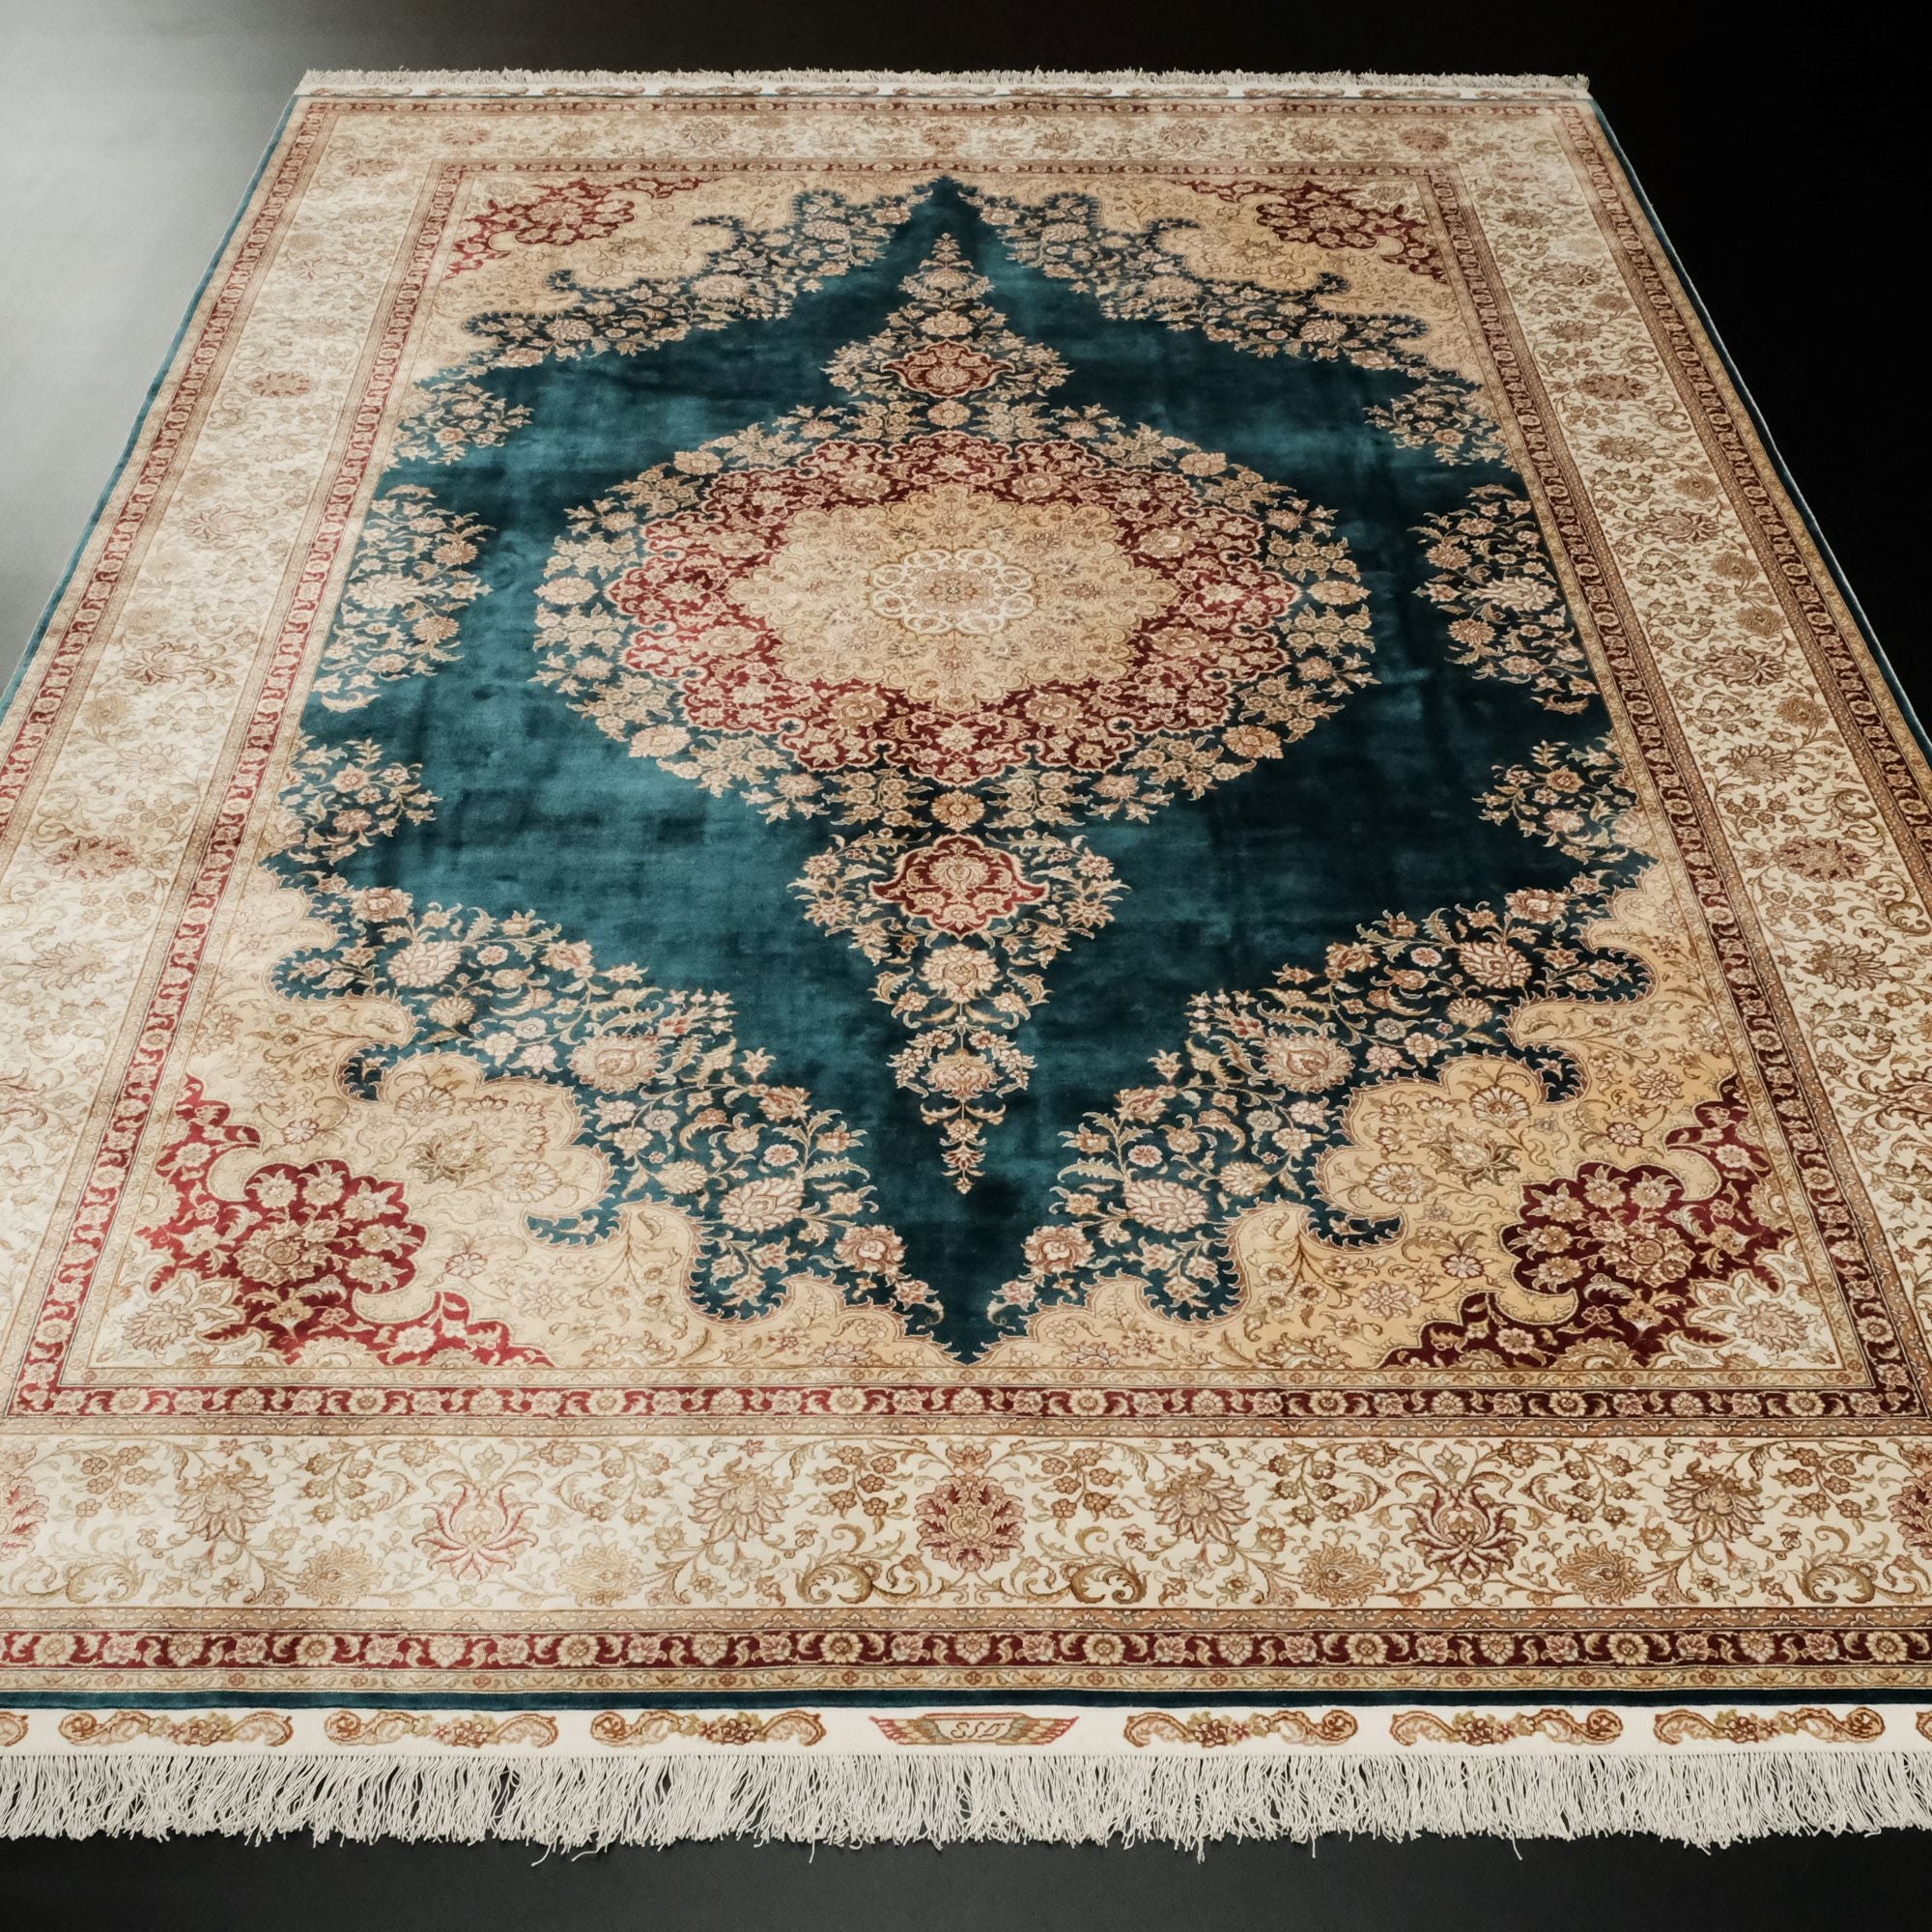 Uşak Medallion Patterned Classic Blue Hand-Woven Silk Classic Carpet